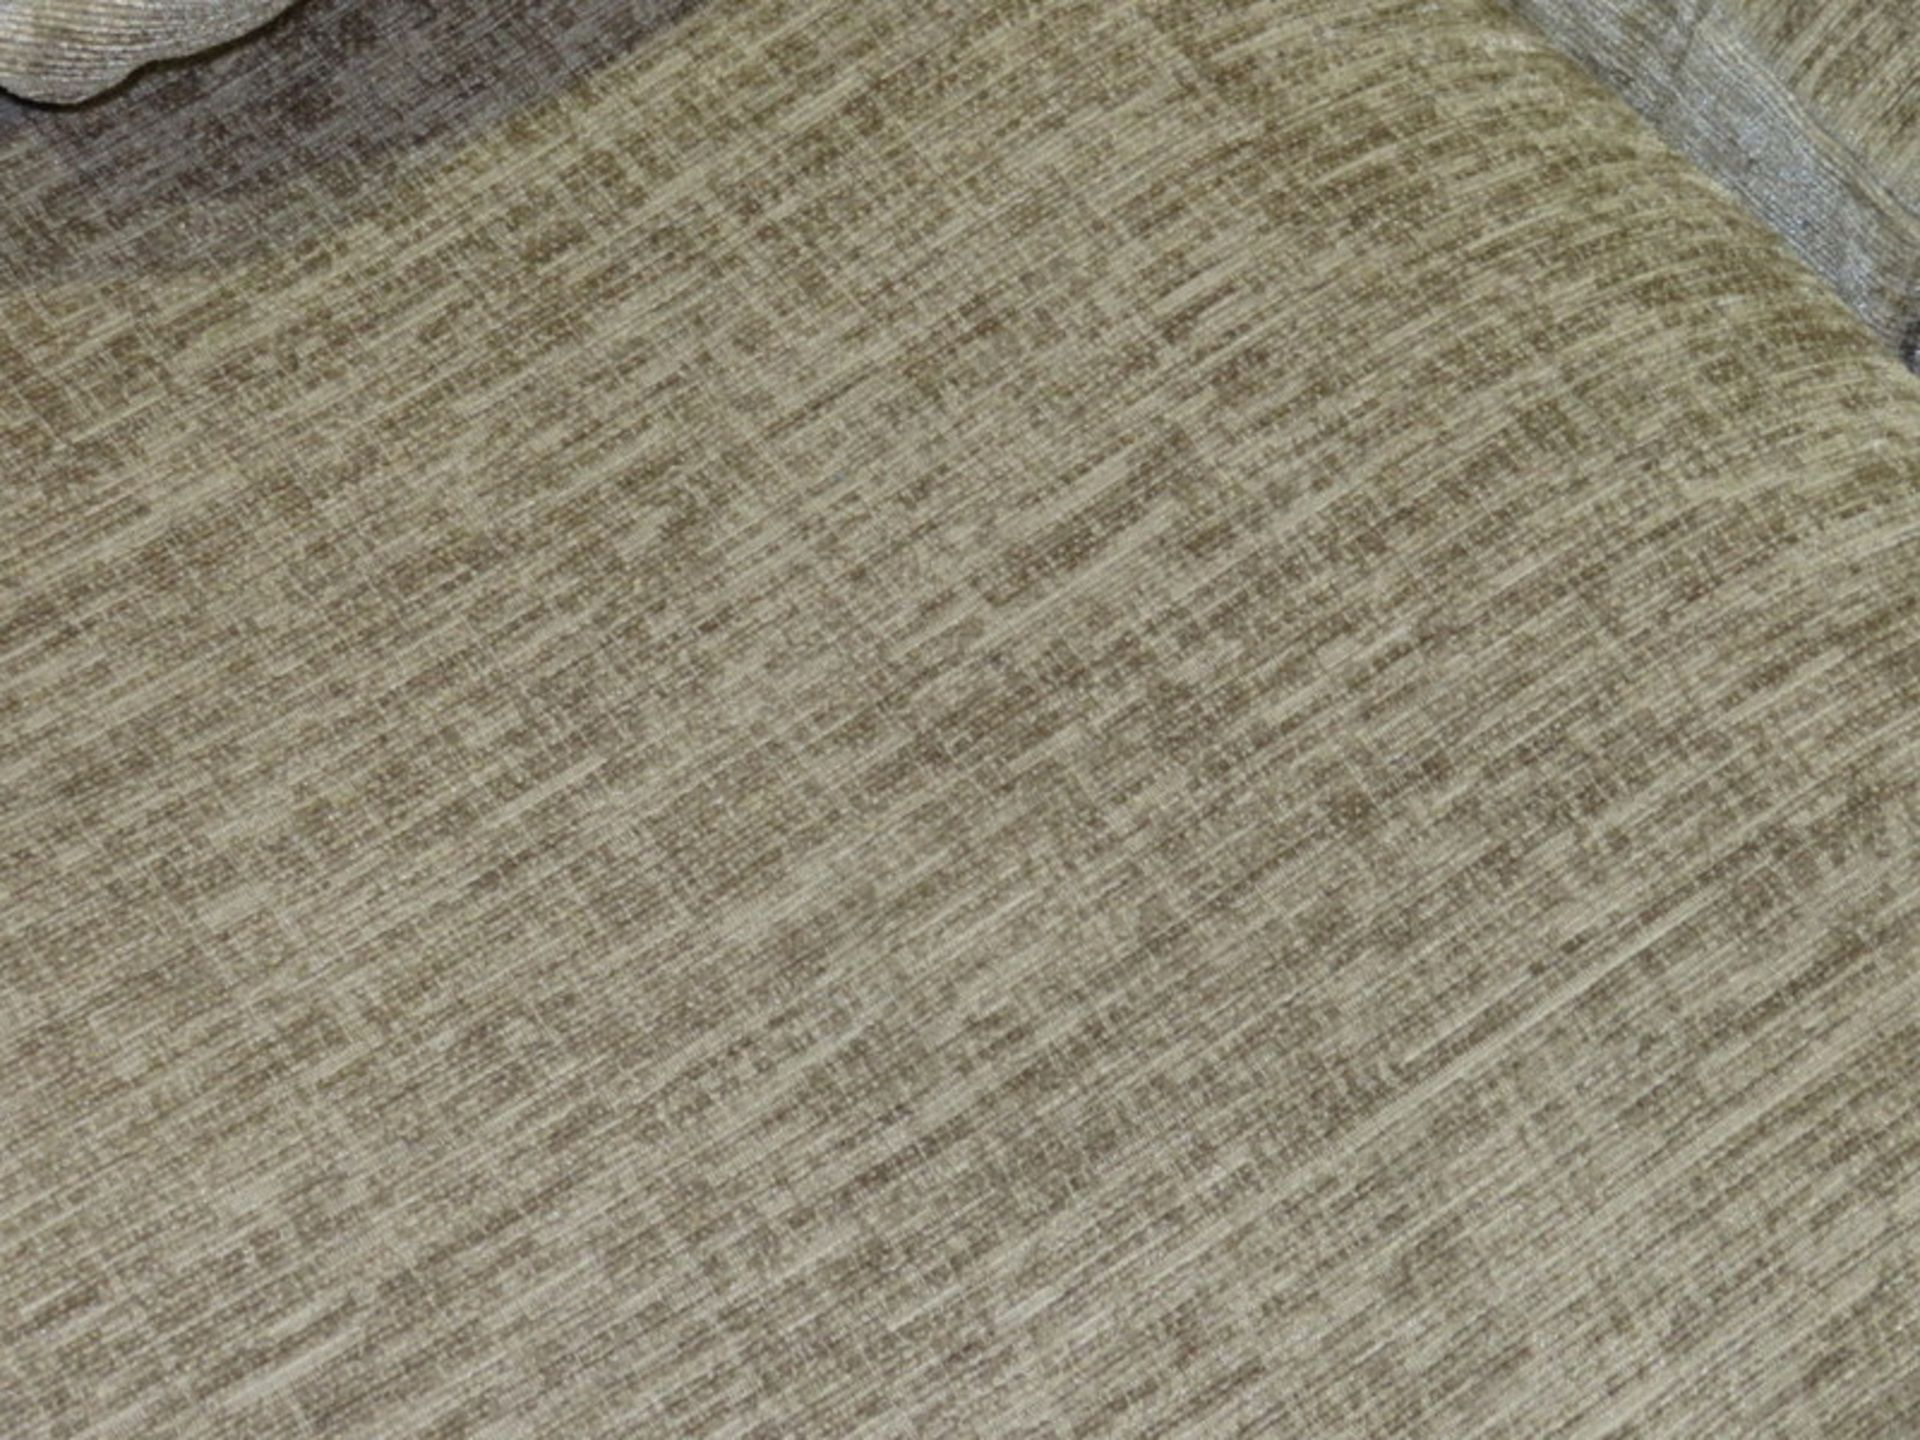 2 Seater beige sofa. Ex Display - 1920 x 860mm (LxD) - Image 3 of 3